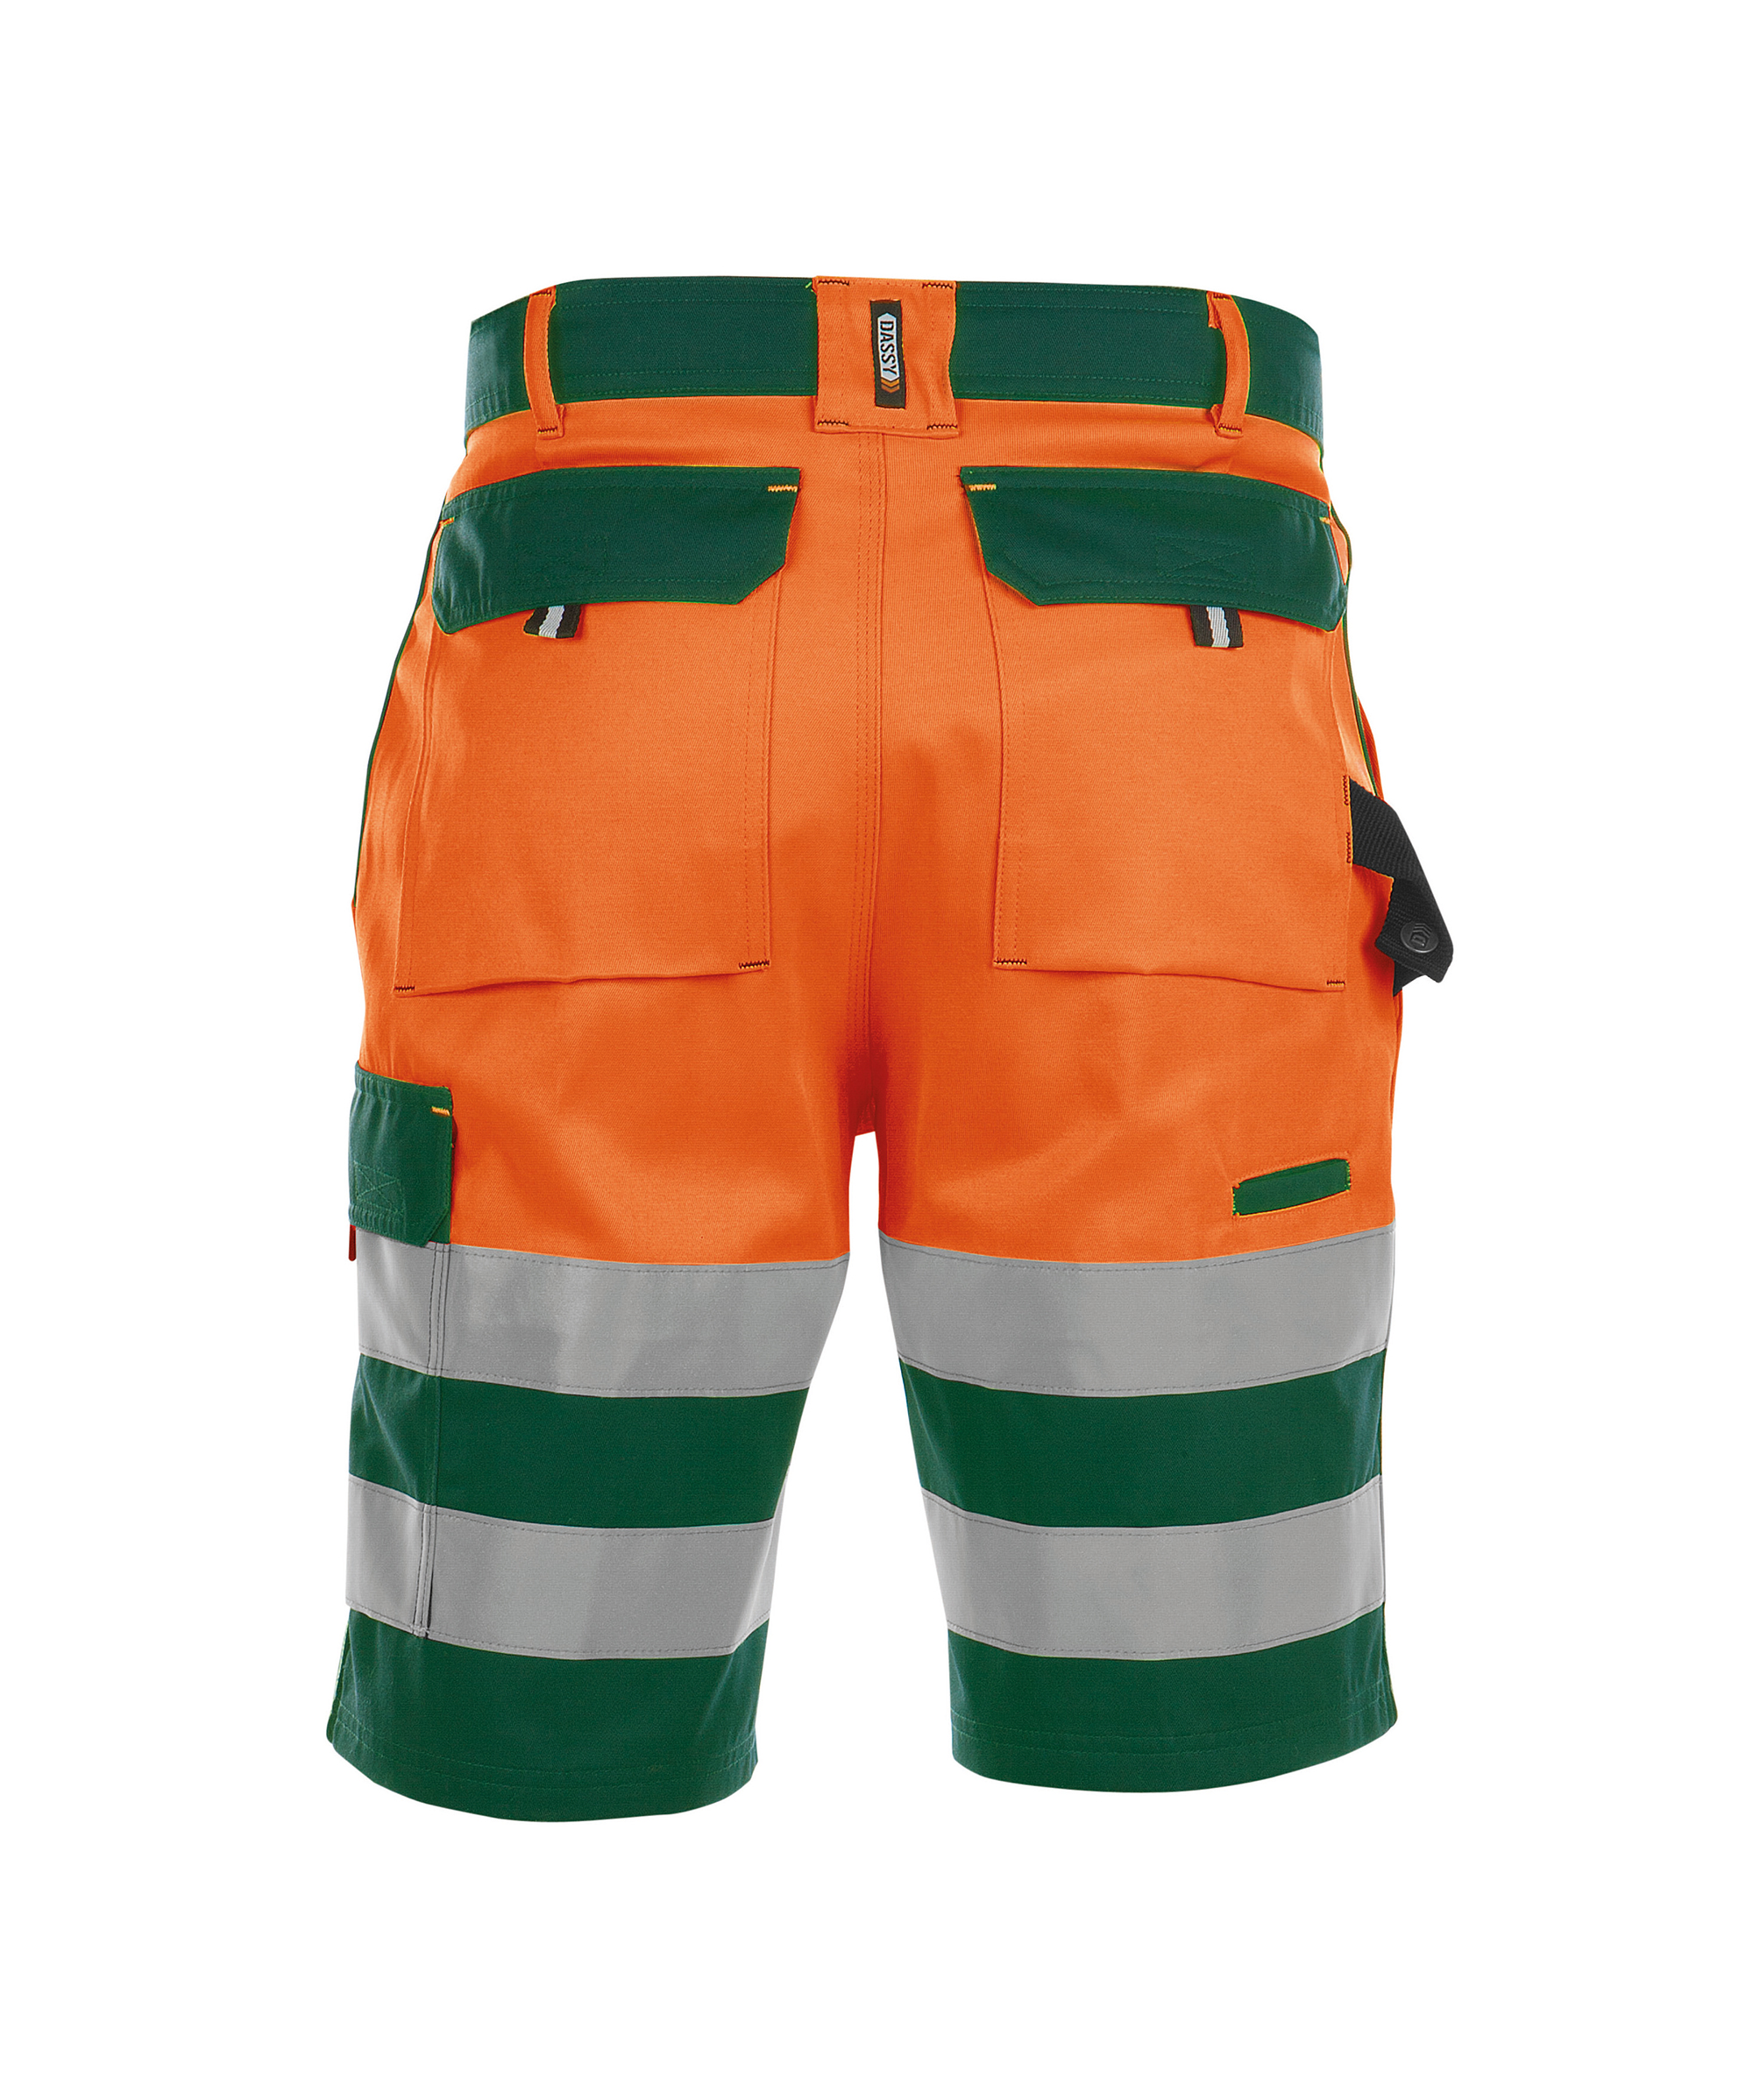 venna_high-visibility-work-shorts_bottle-green-fluo-orange_back.jpg